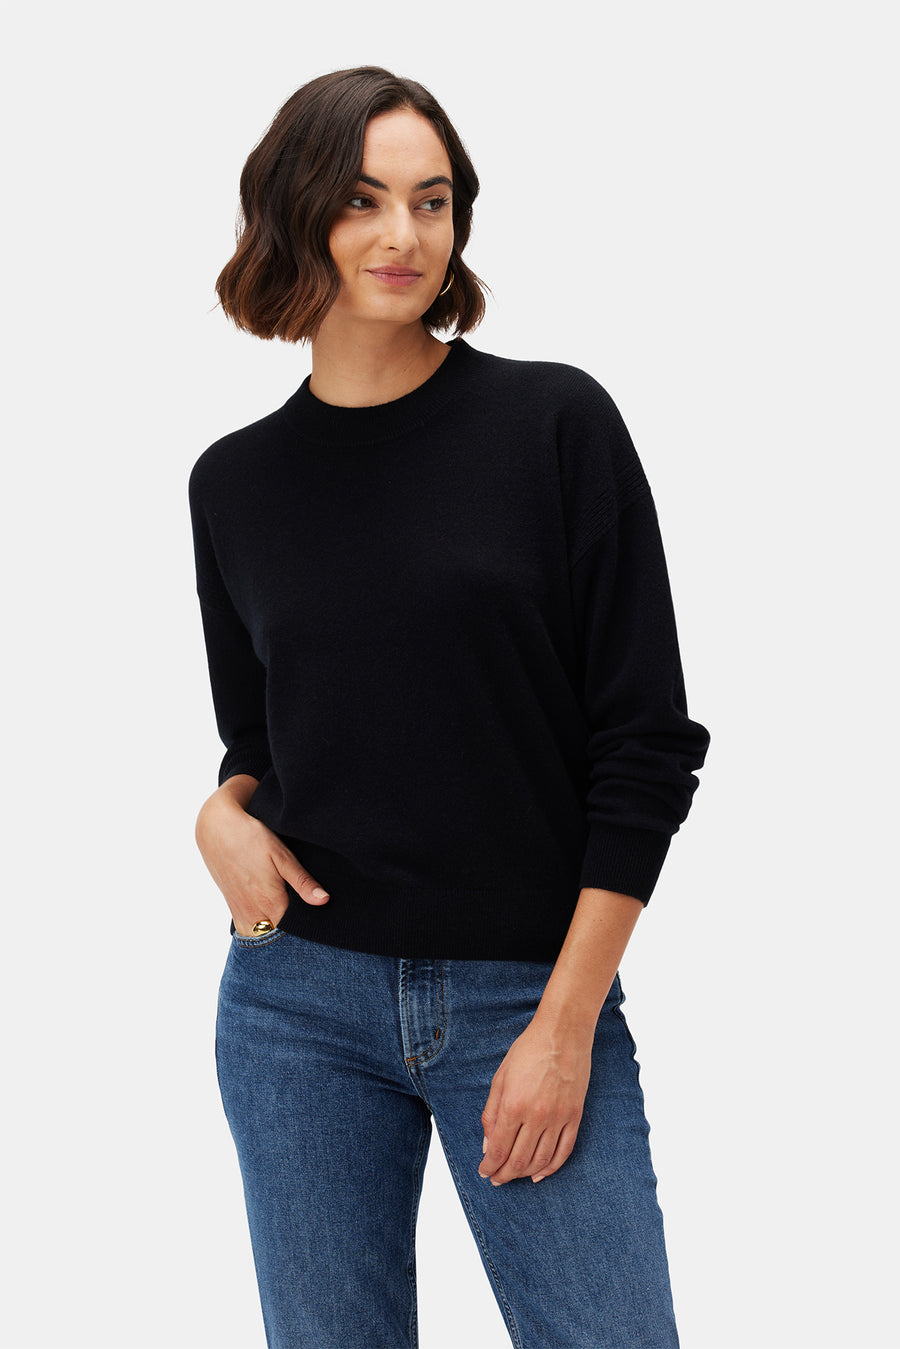 Pearl Cashmere Sweater - Licorice